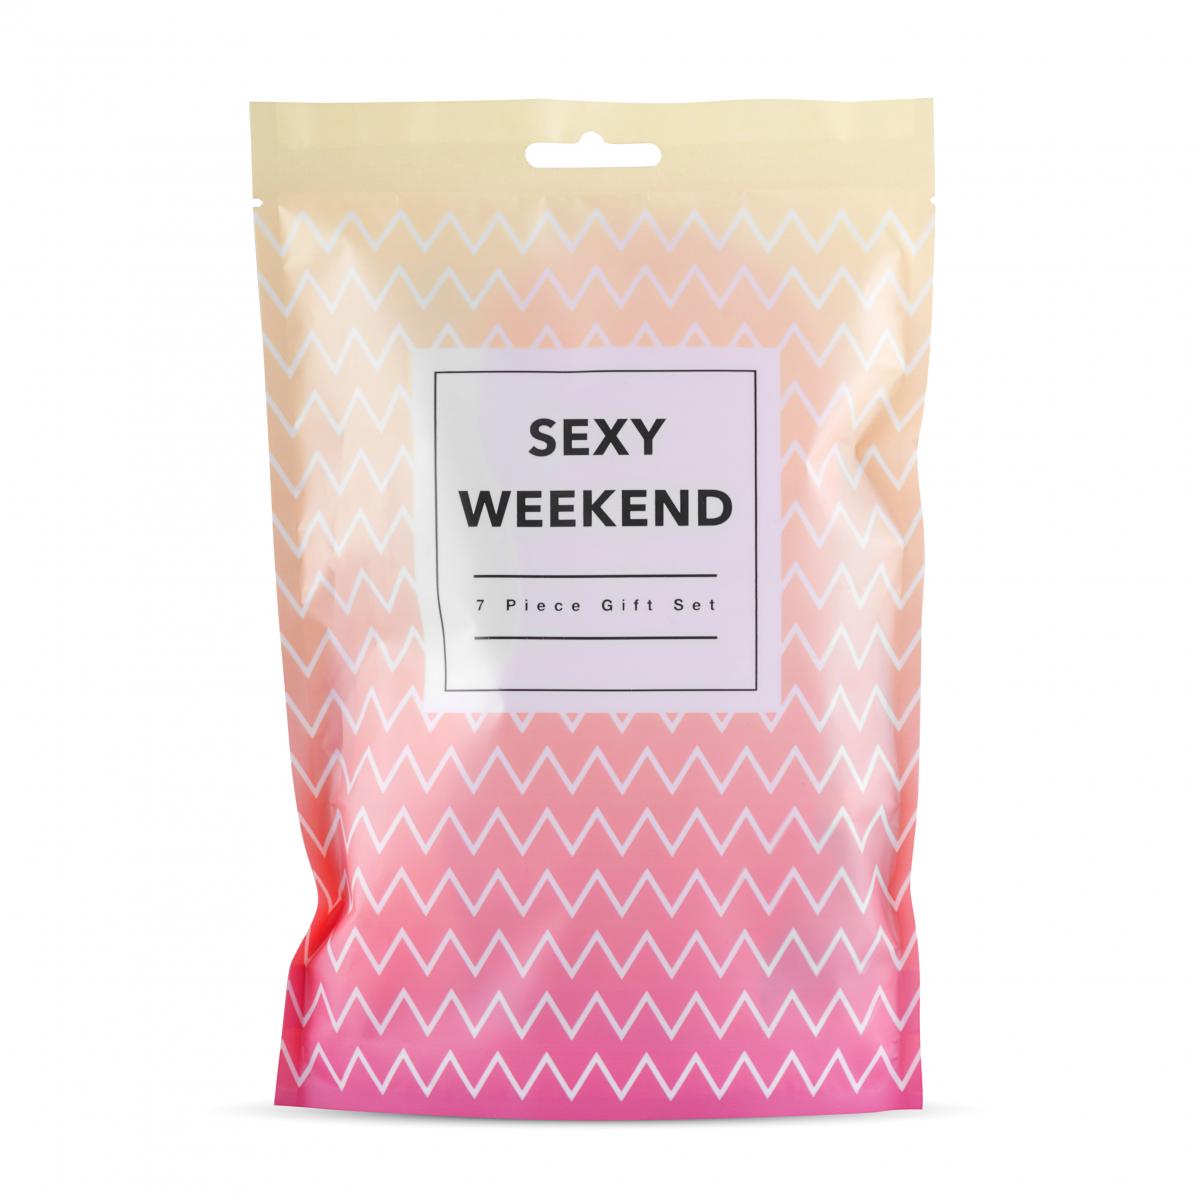 Loveboxxx - Sexy Weekend Gift Set